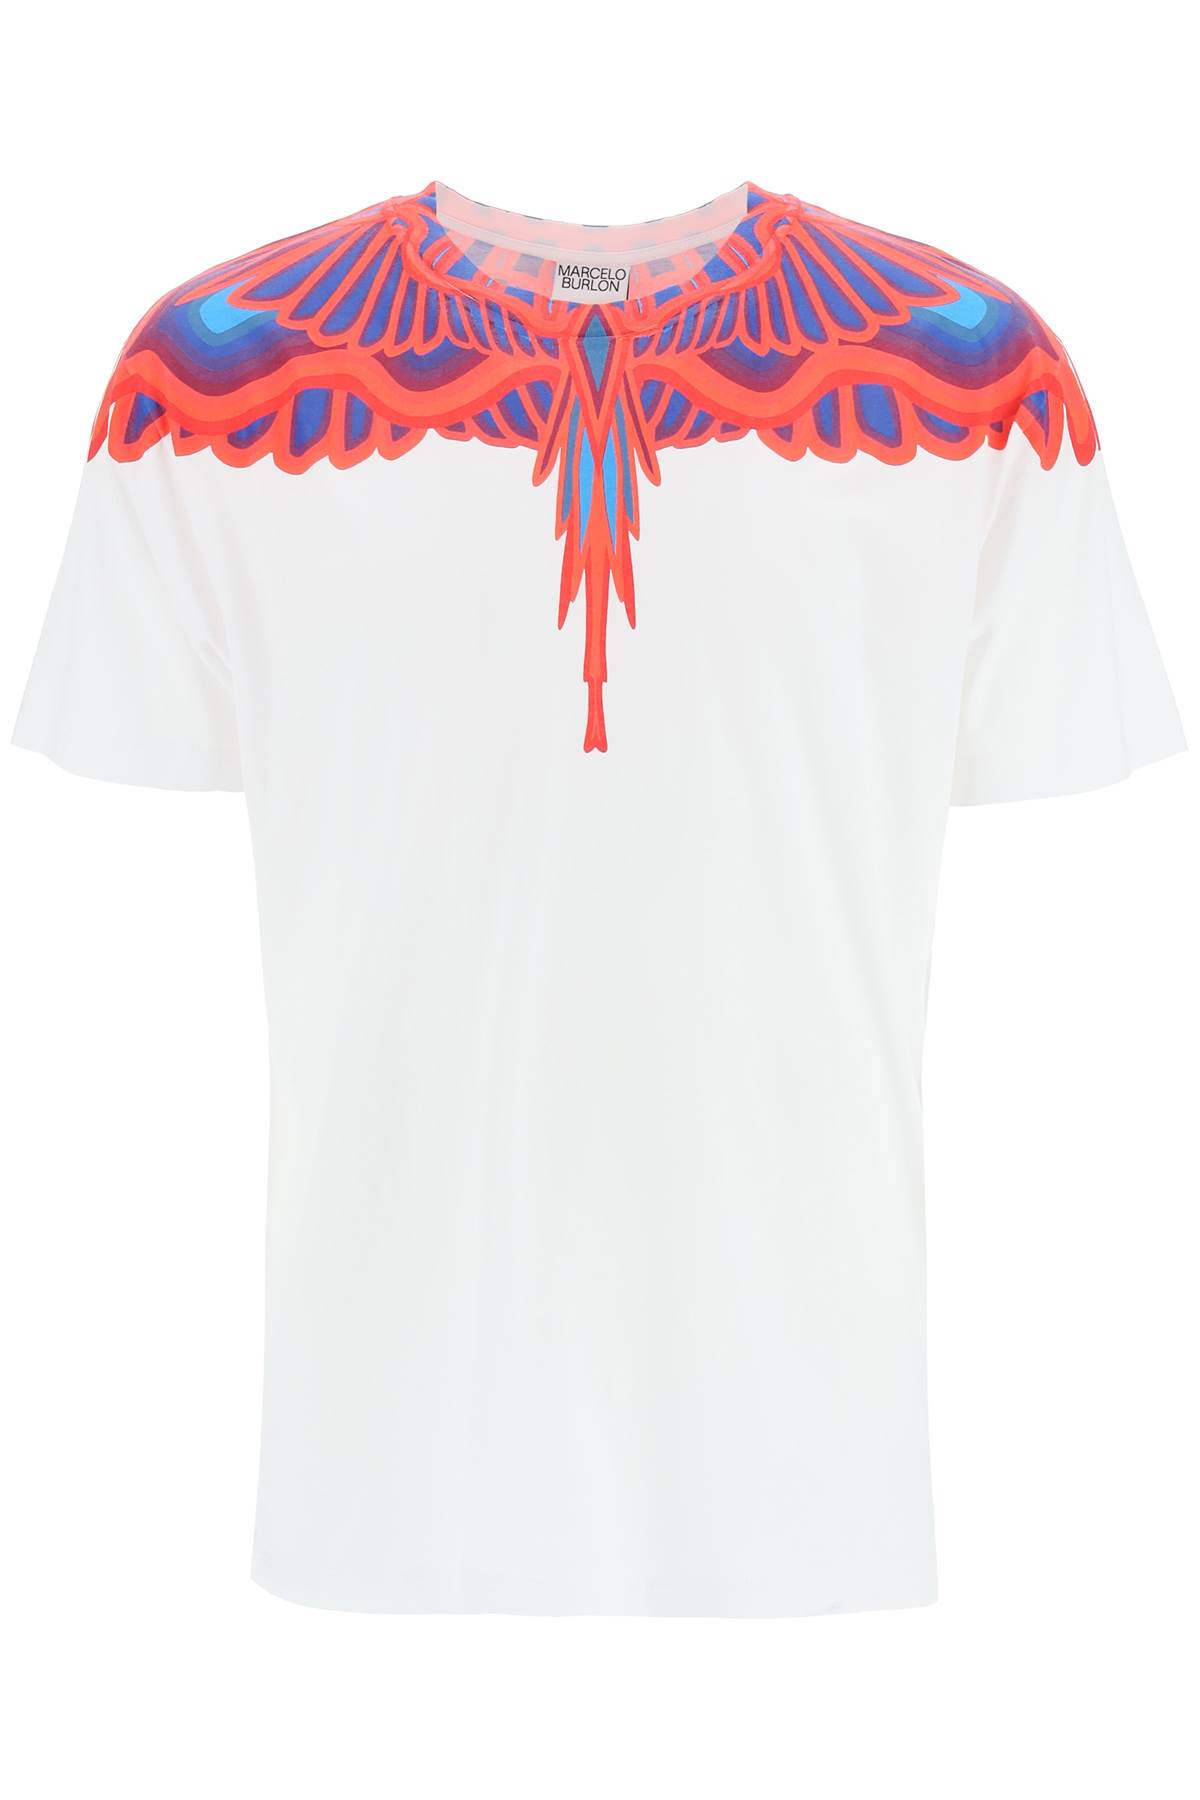 Marcelo Burlon Curved Wings Print T-shirt